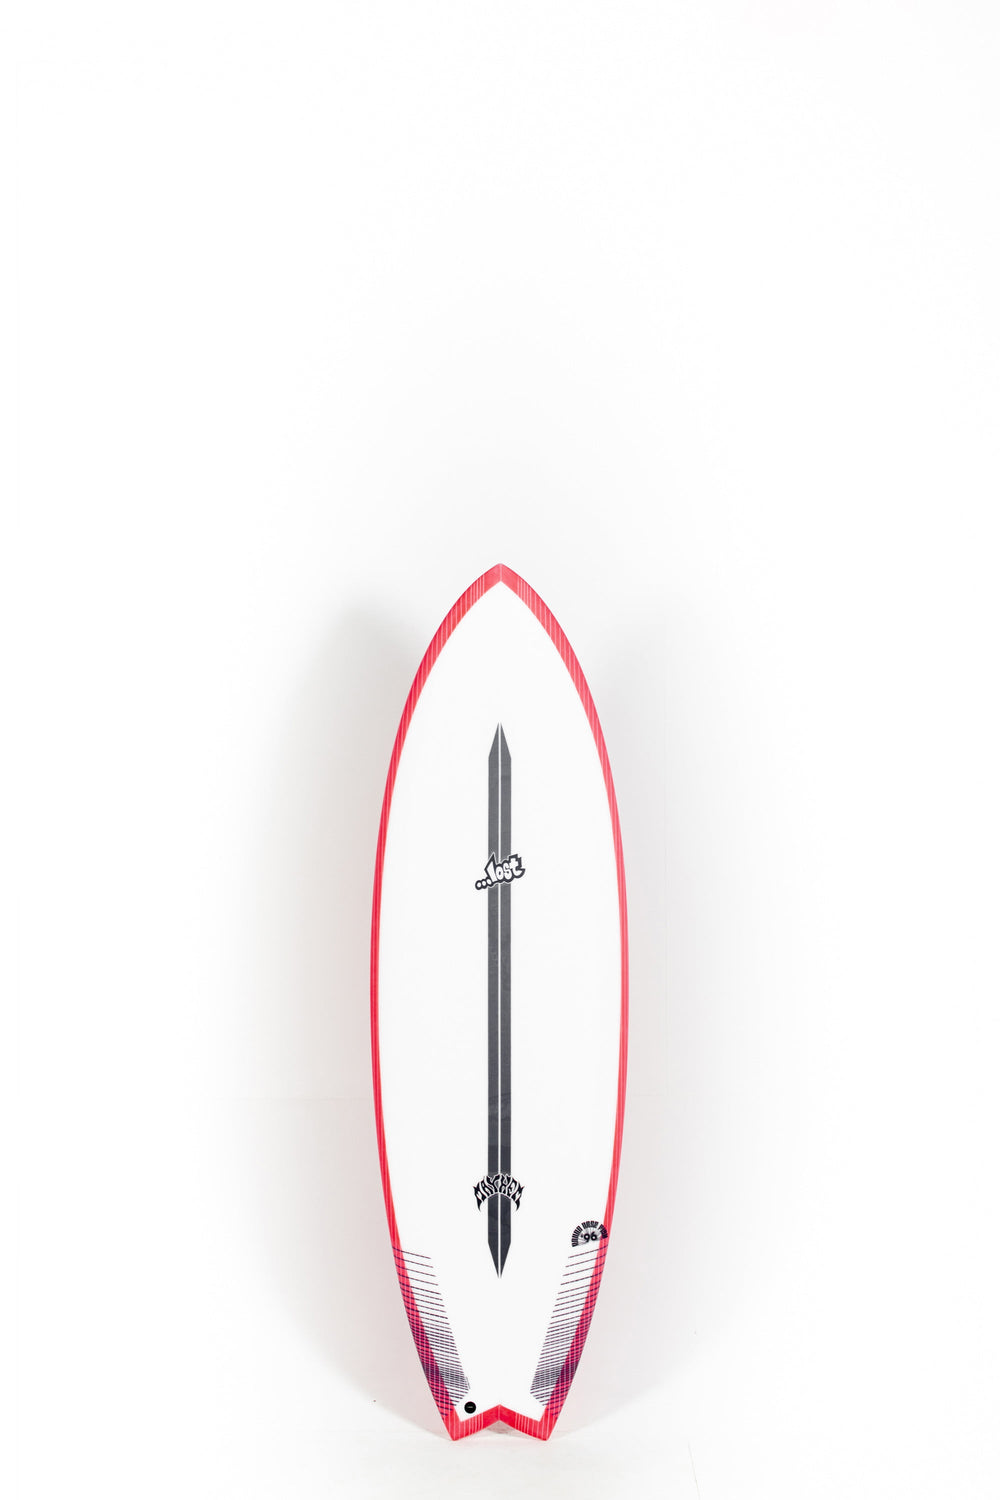 Pukas Surf Shop - Lost Surfboard - ROUND NOSE FISH - RNF '96 - Light Speed - 5'7